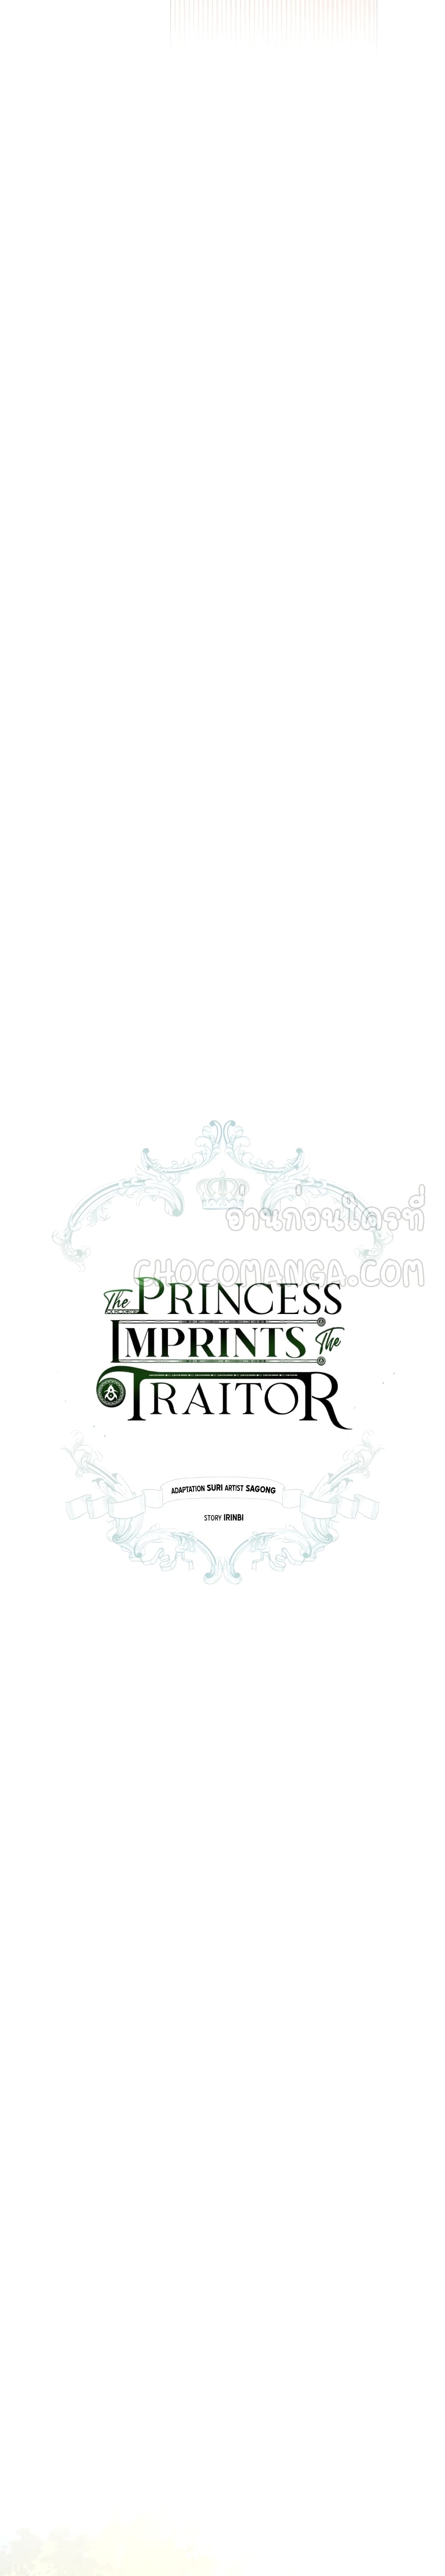 Princess Imprints 14-14